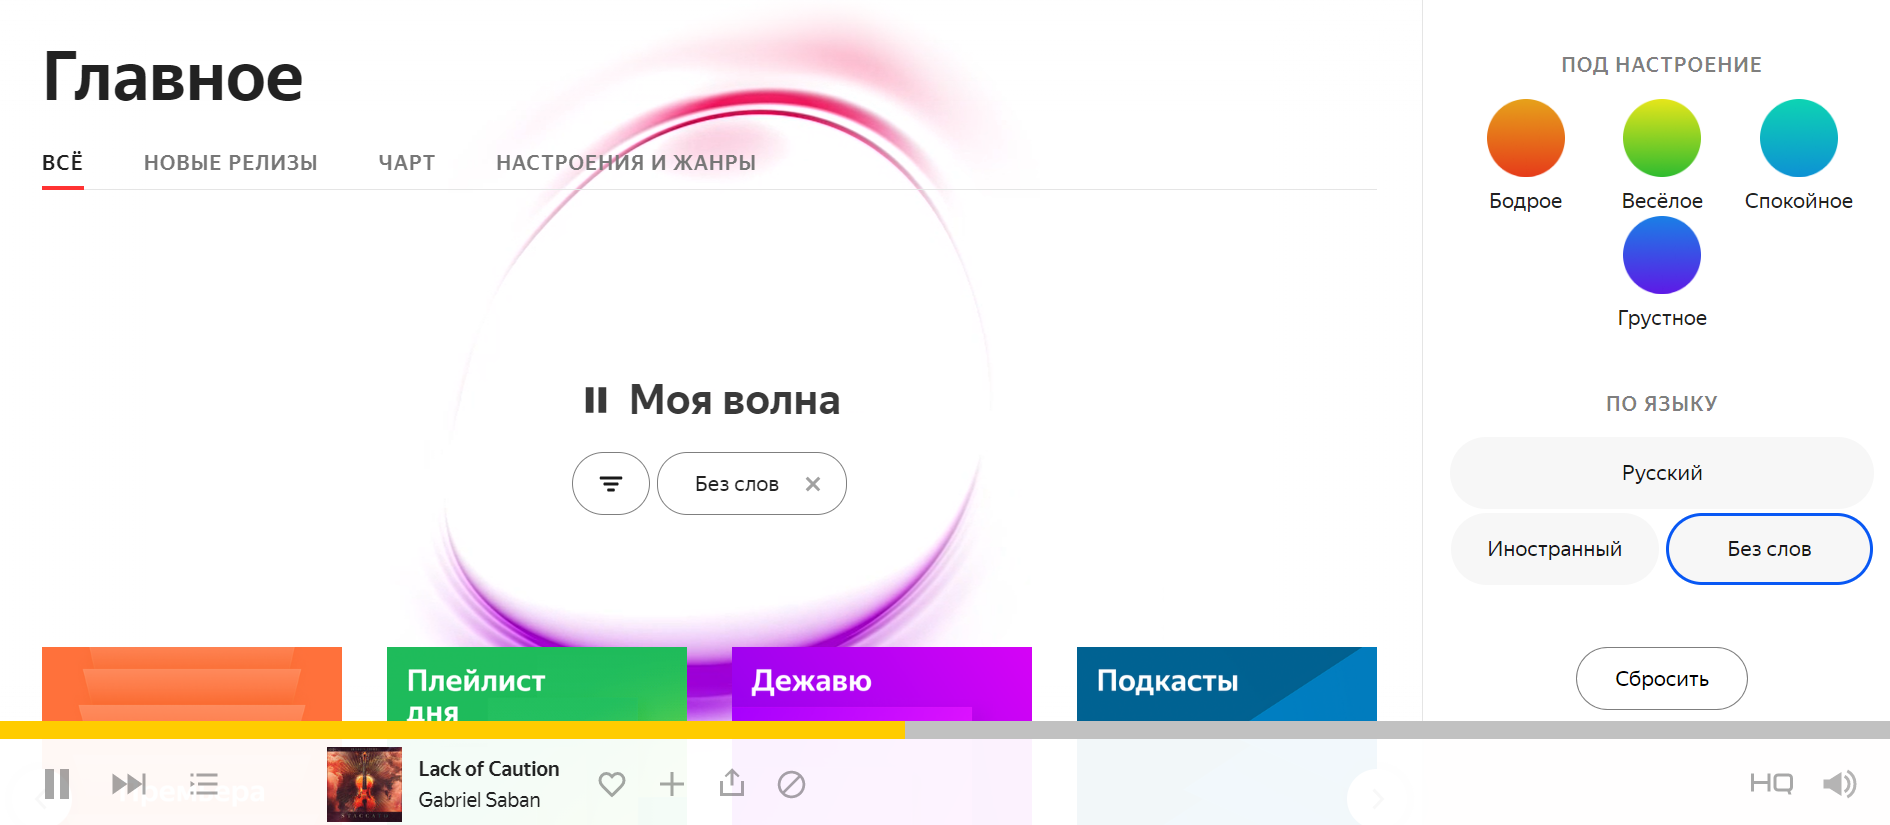 Настройка "Без слов" в Яндекс Музыке